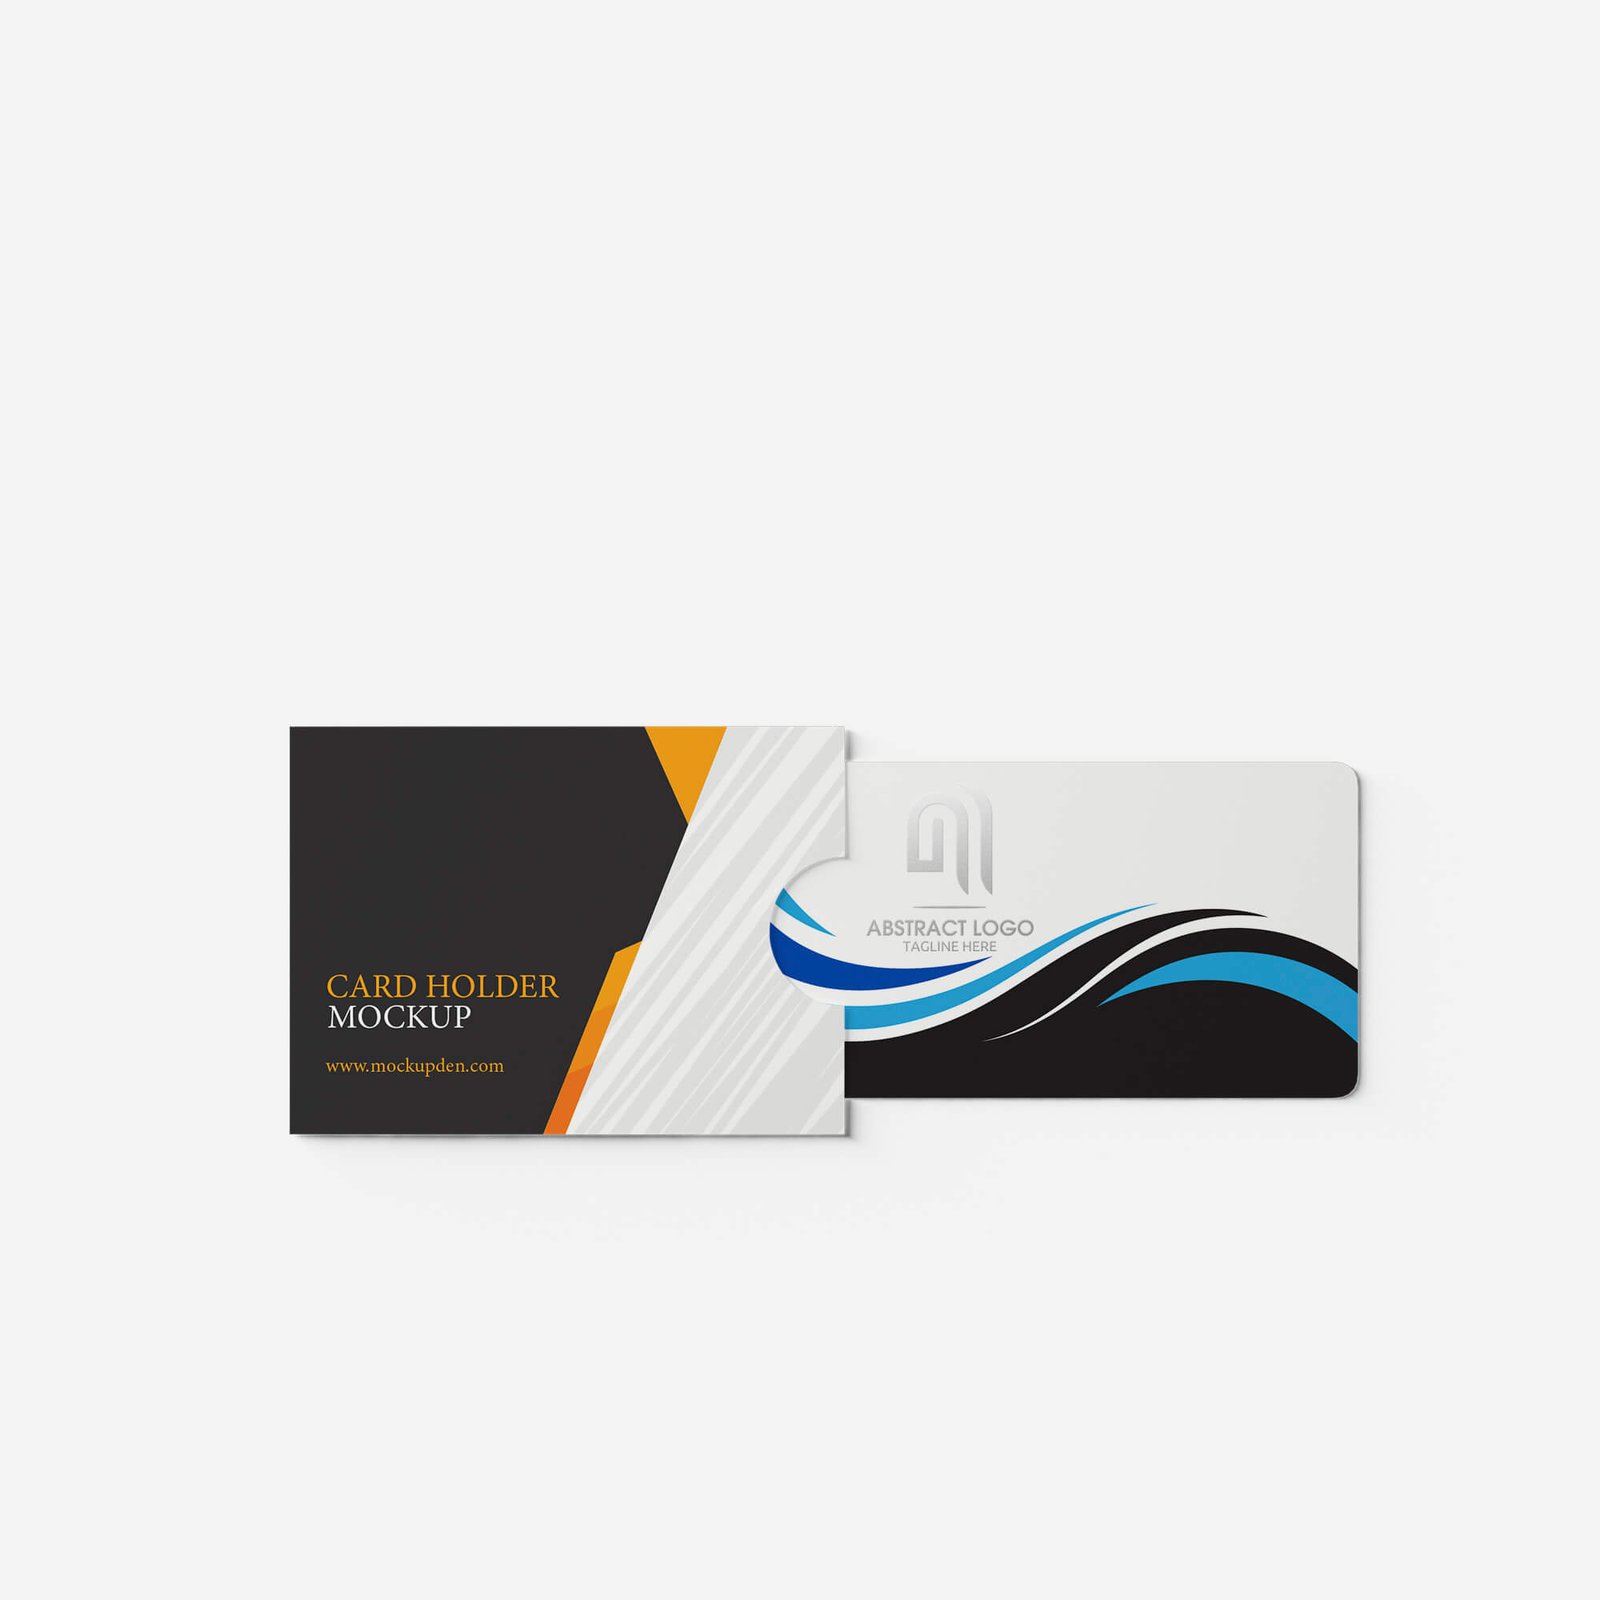 Design Free Card Holder Mockup PSD Template